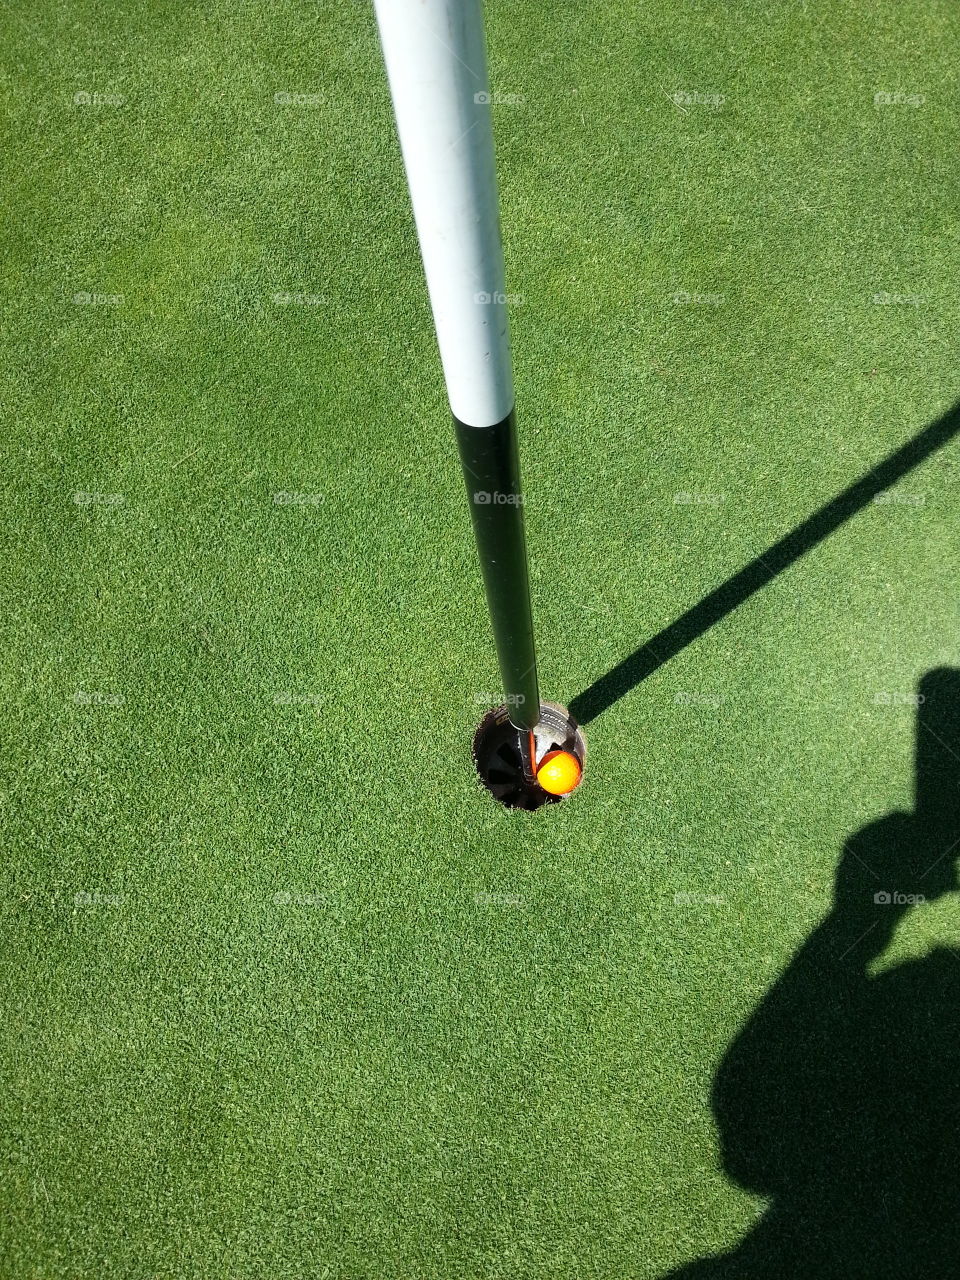 Golf_131203. Golf ball in hole